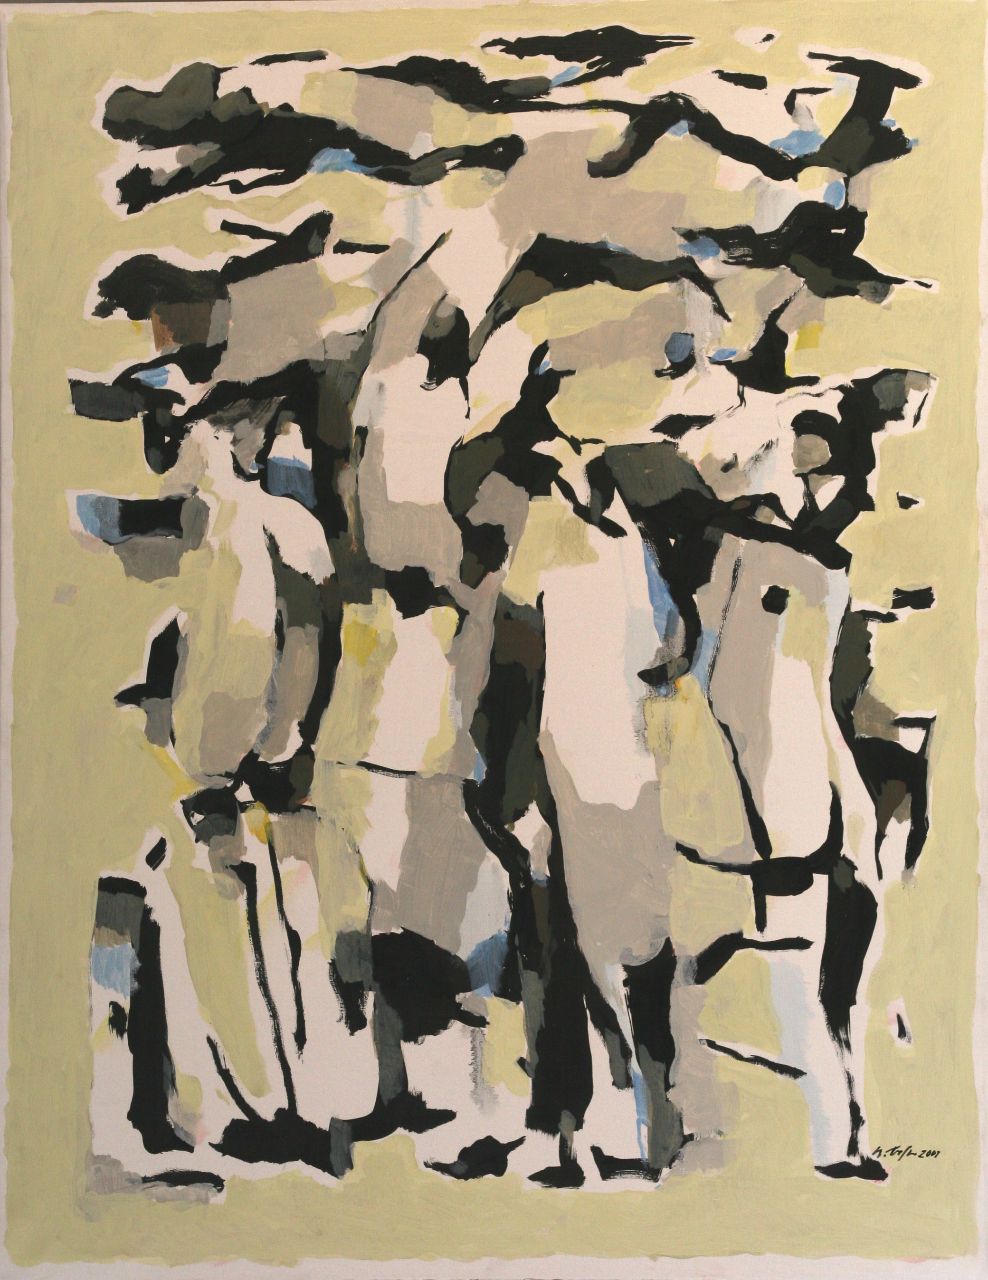 Roland Dörfler, Figurenbaum, 2001, Öl auf Leinwand, 115 cm x 90 cm, dör052kü